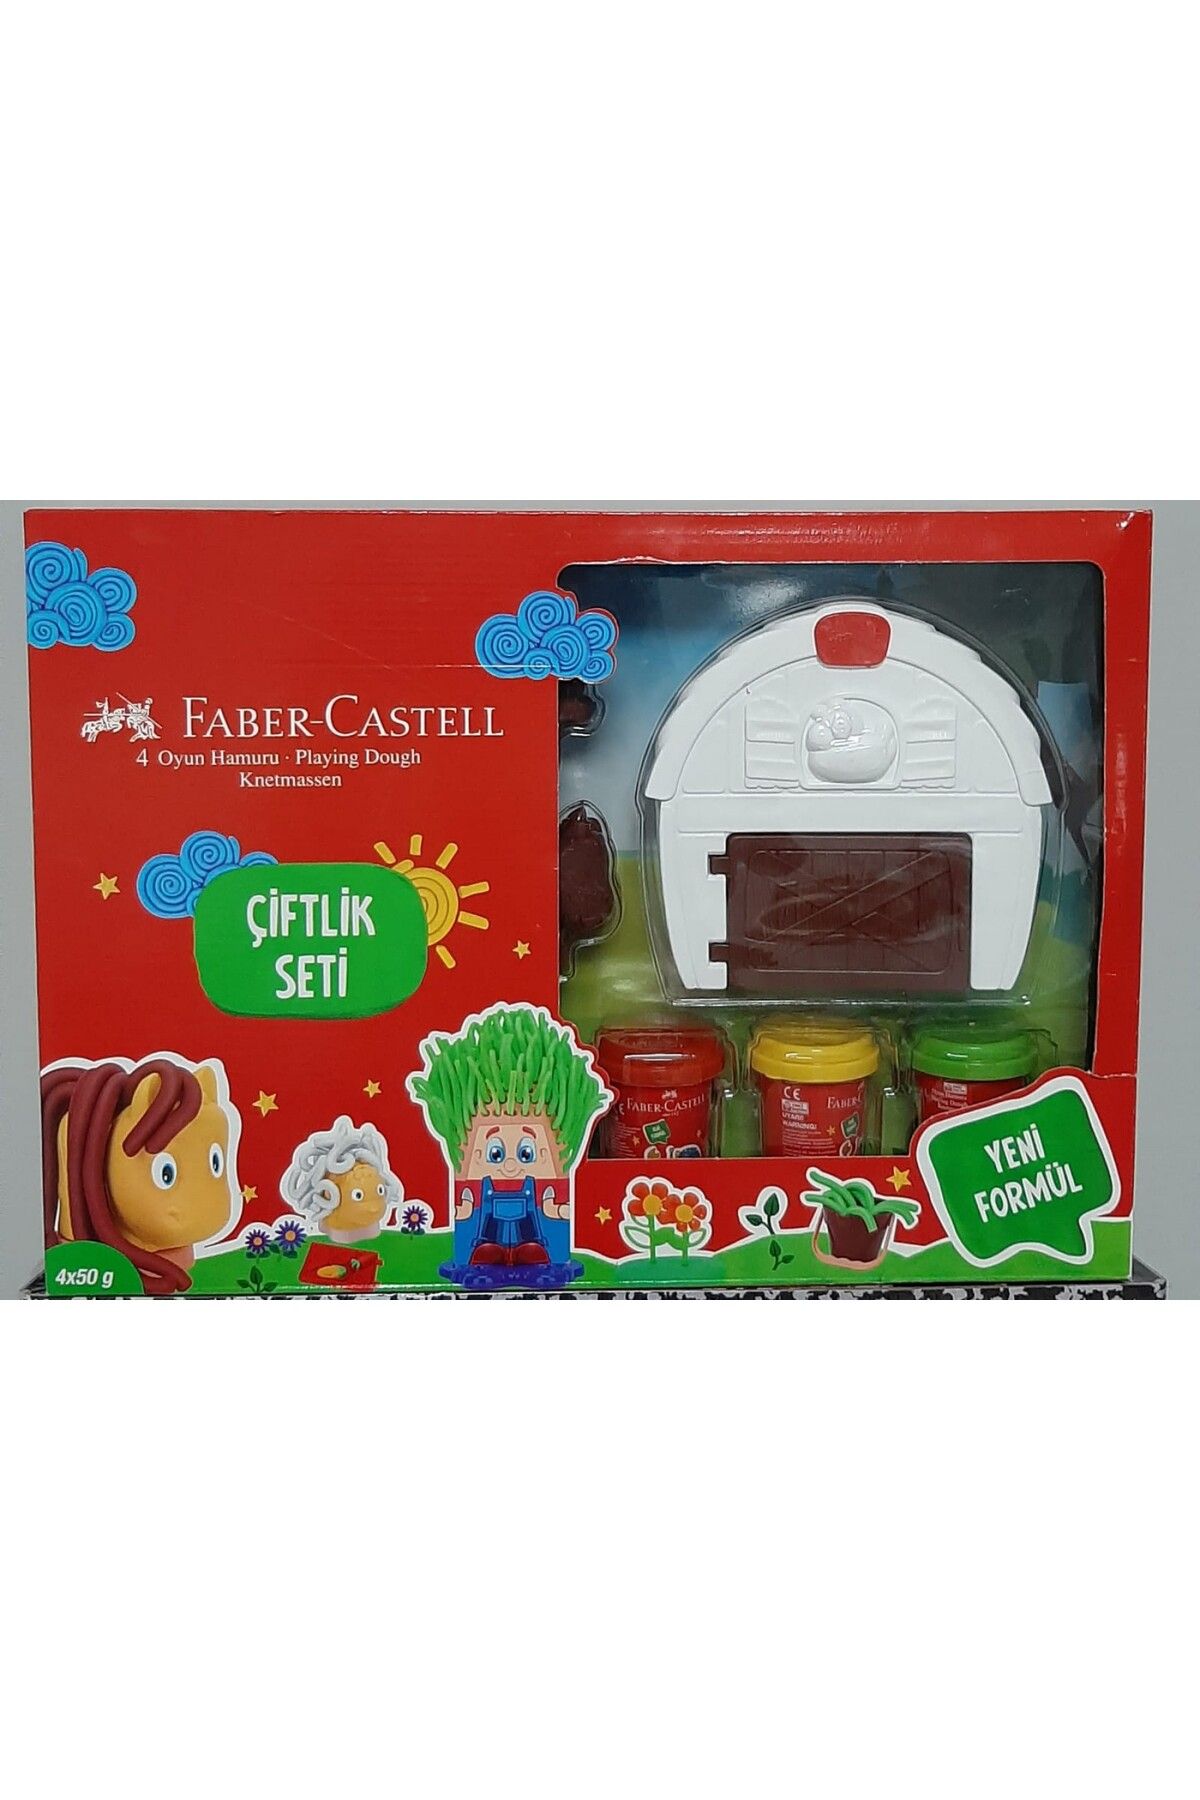 Faber Castell Faber-castell Oyun Hamuru Çiftlik Seti